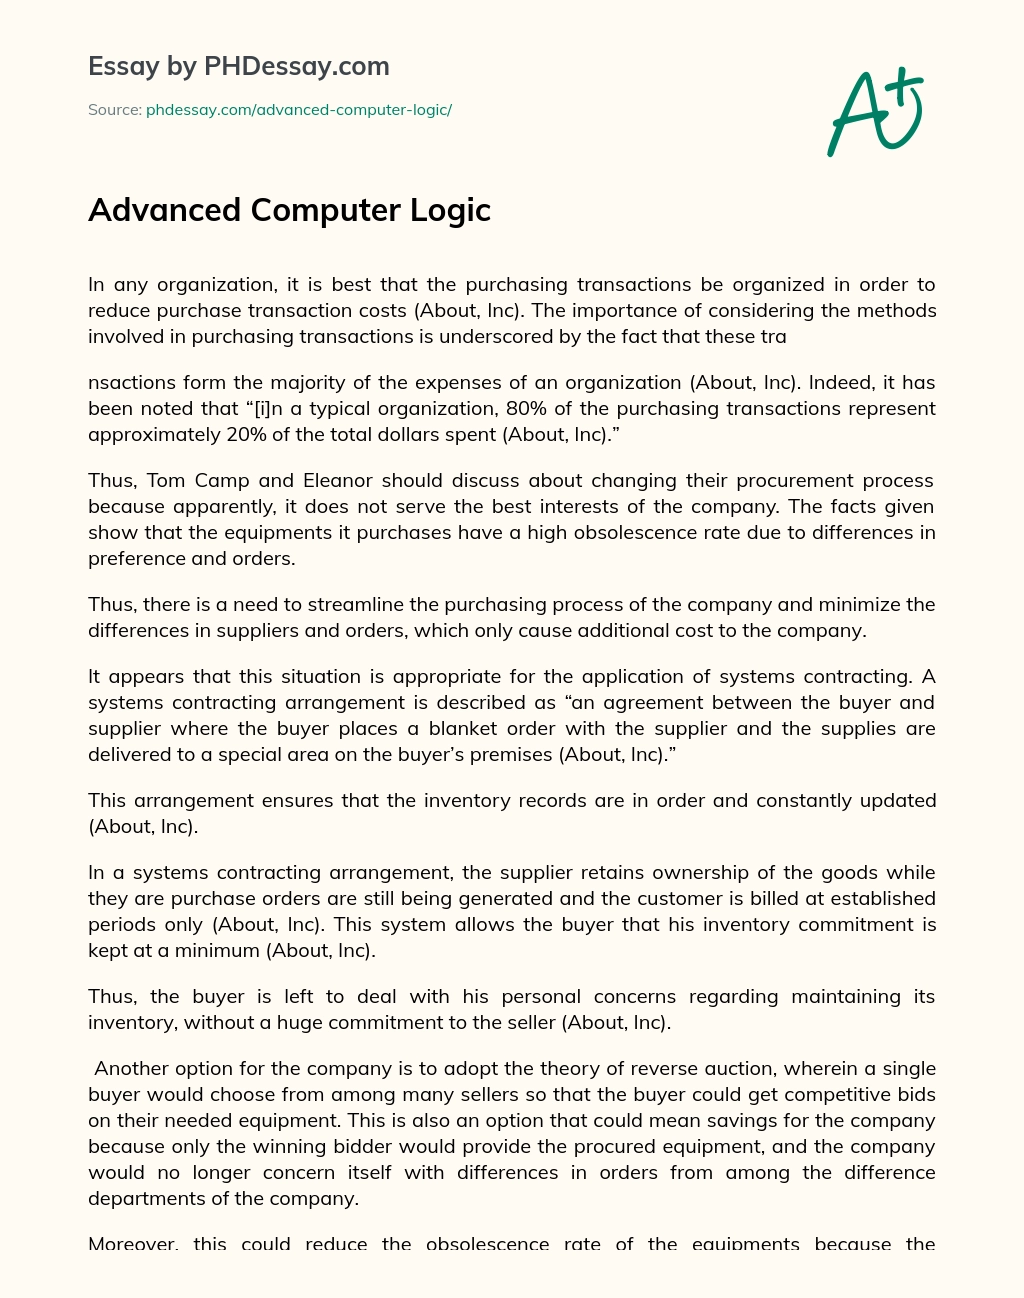 Advanced Computer Logic essay